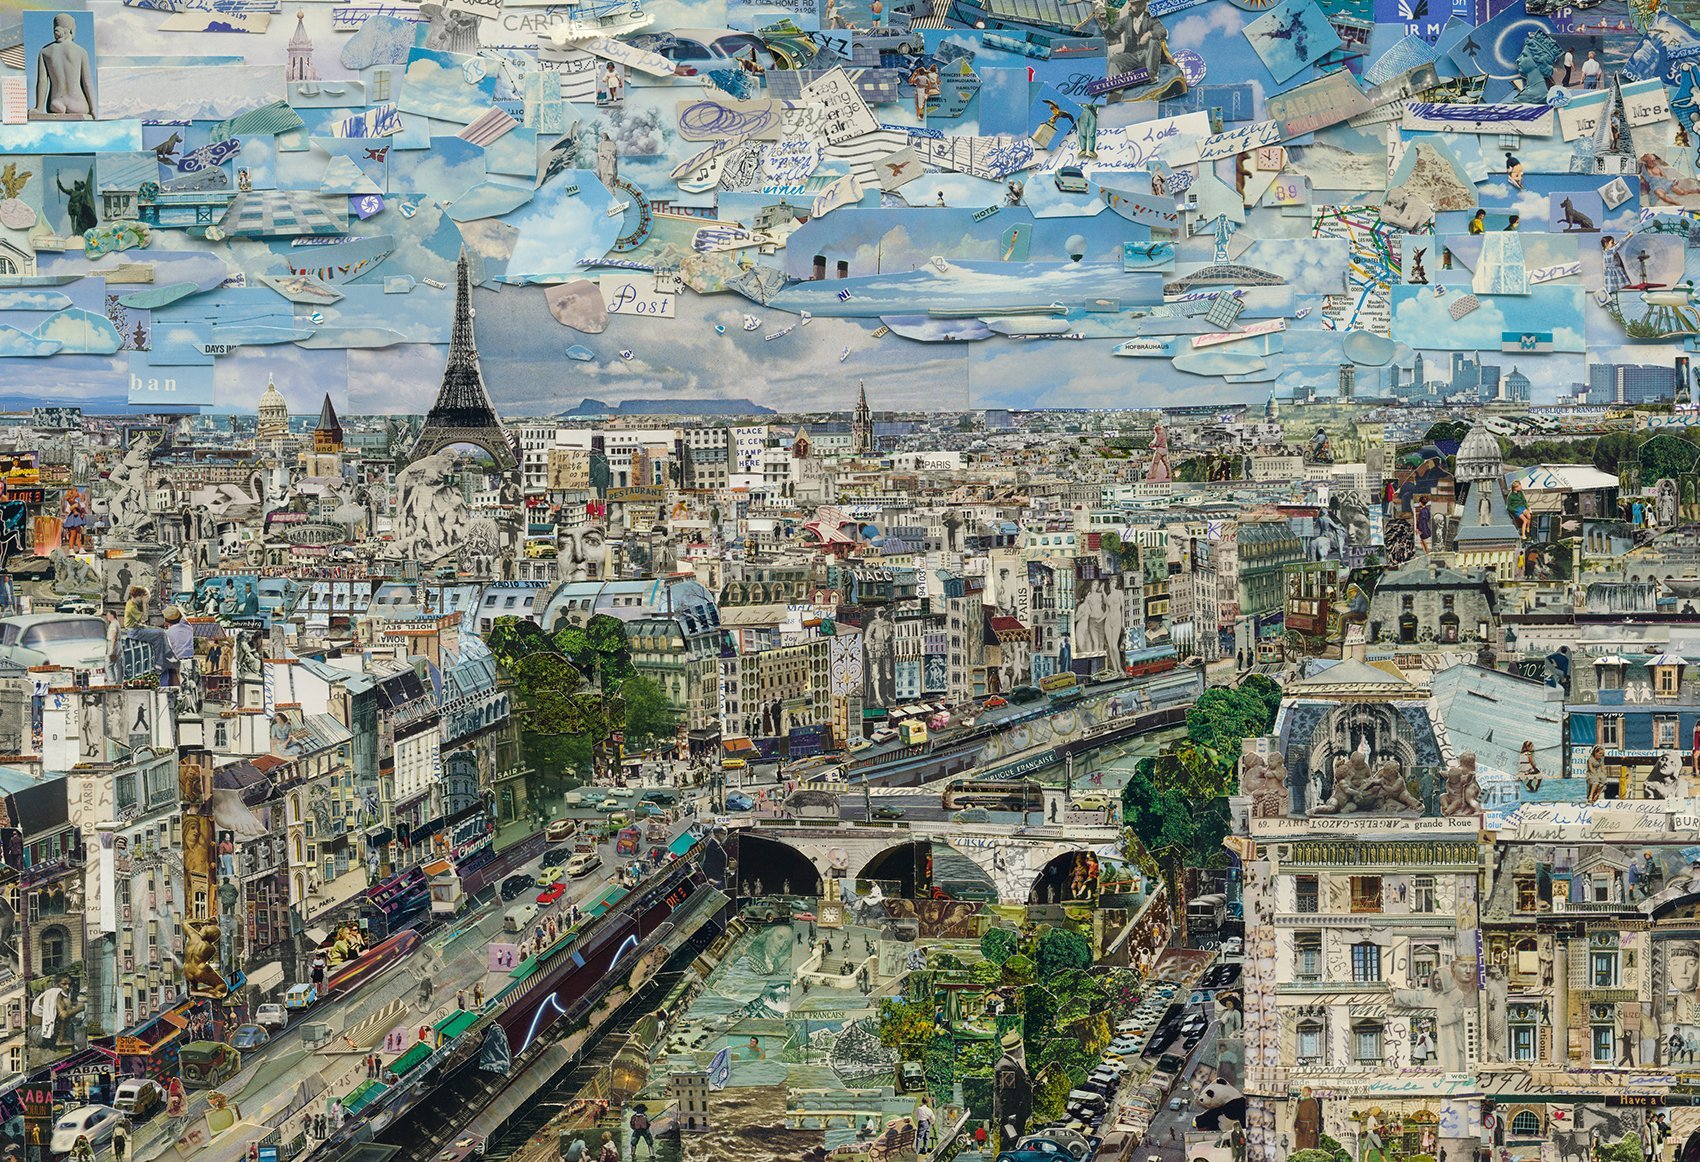  Vik Muniz,  Paris (from Postcards from Nowhere),  2013. Digital C-print. 70.98 x 107.01 inches. 